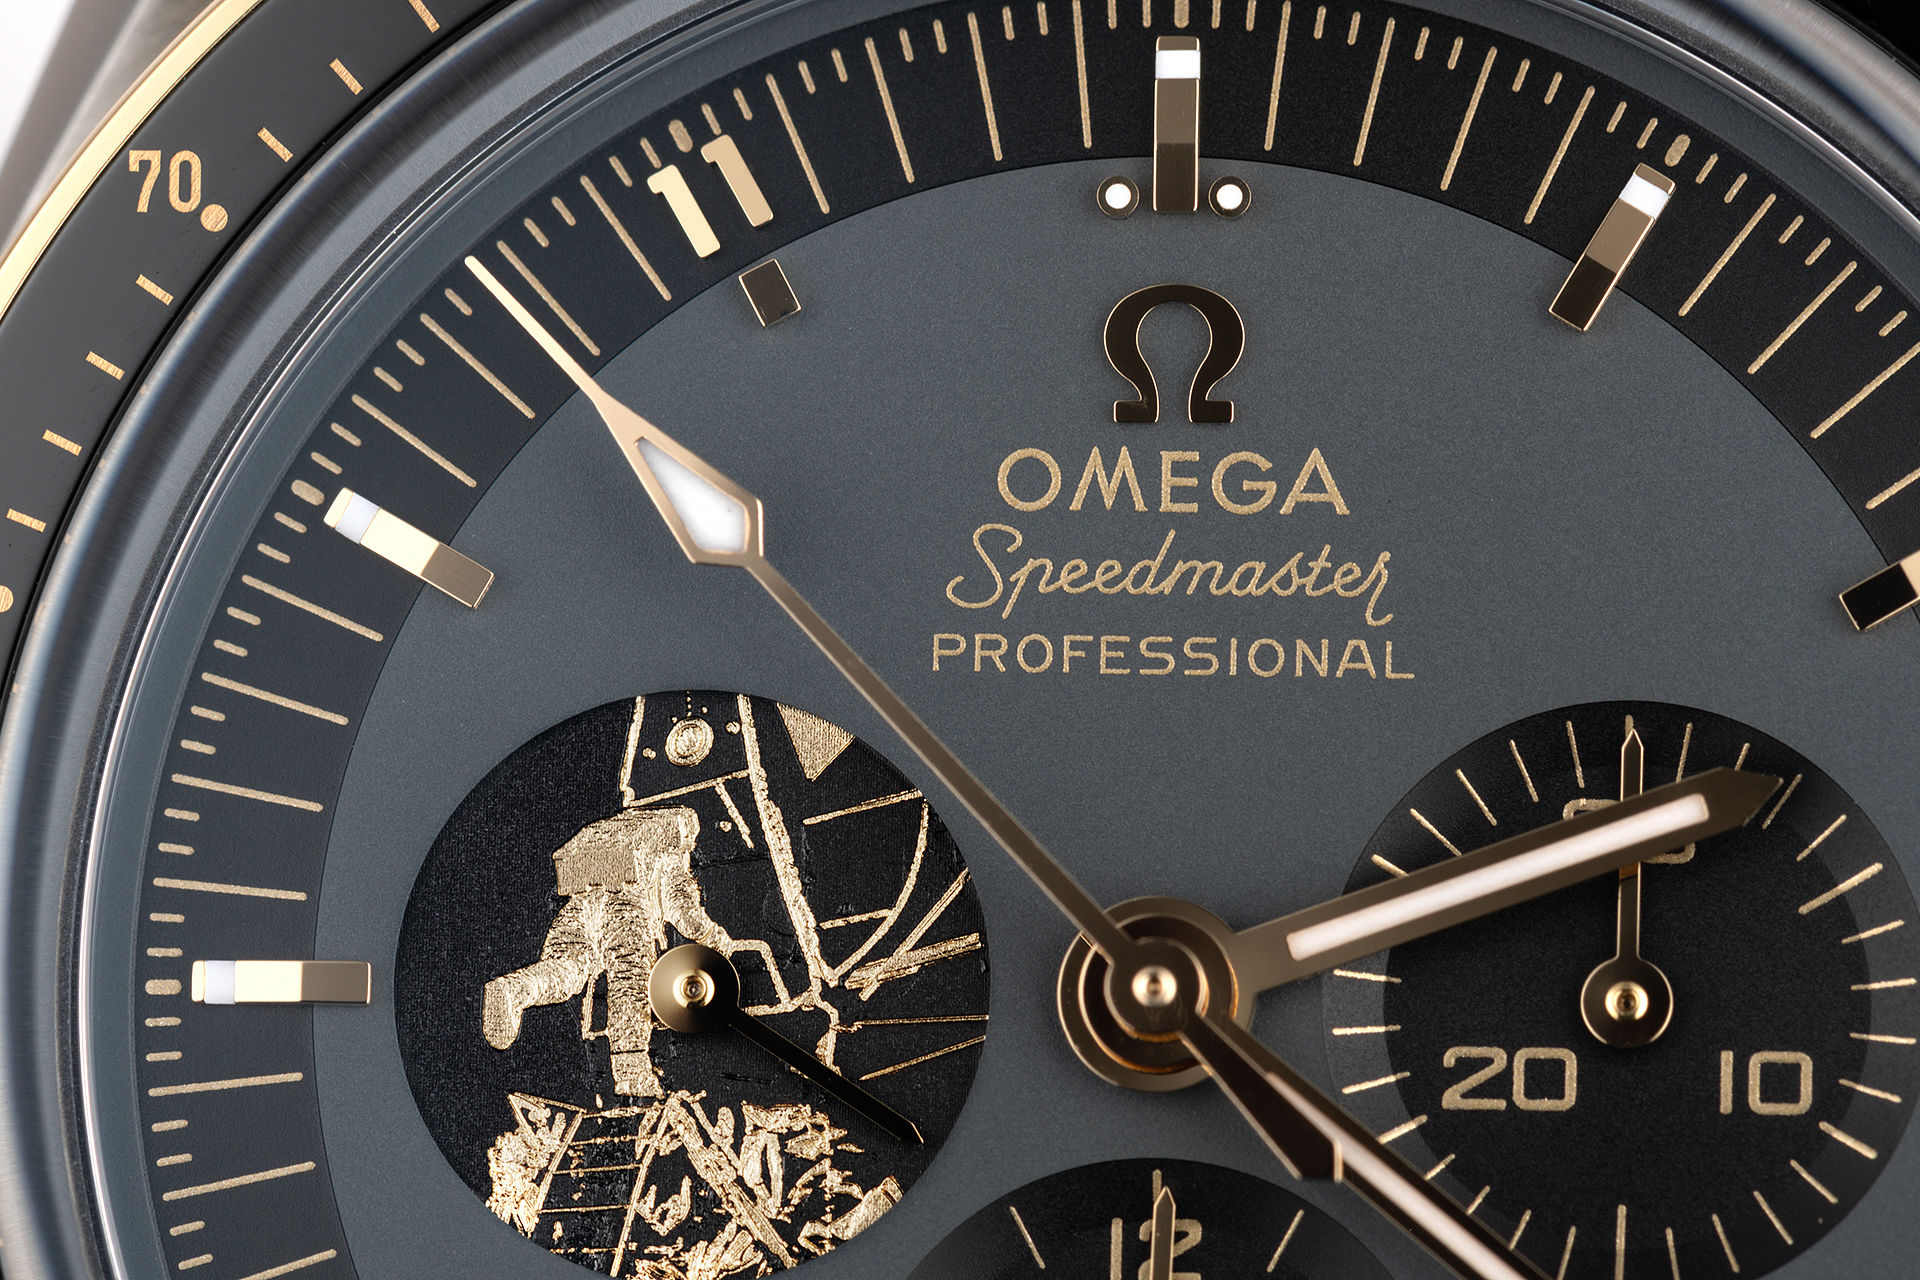 ref 31020425001001 | Brand New 'Unworn' | Omega Speedmaster Professional